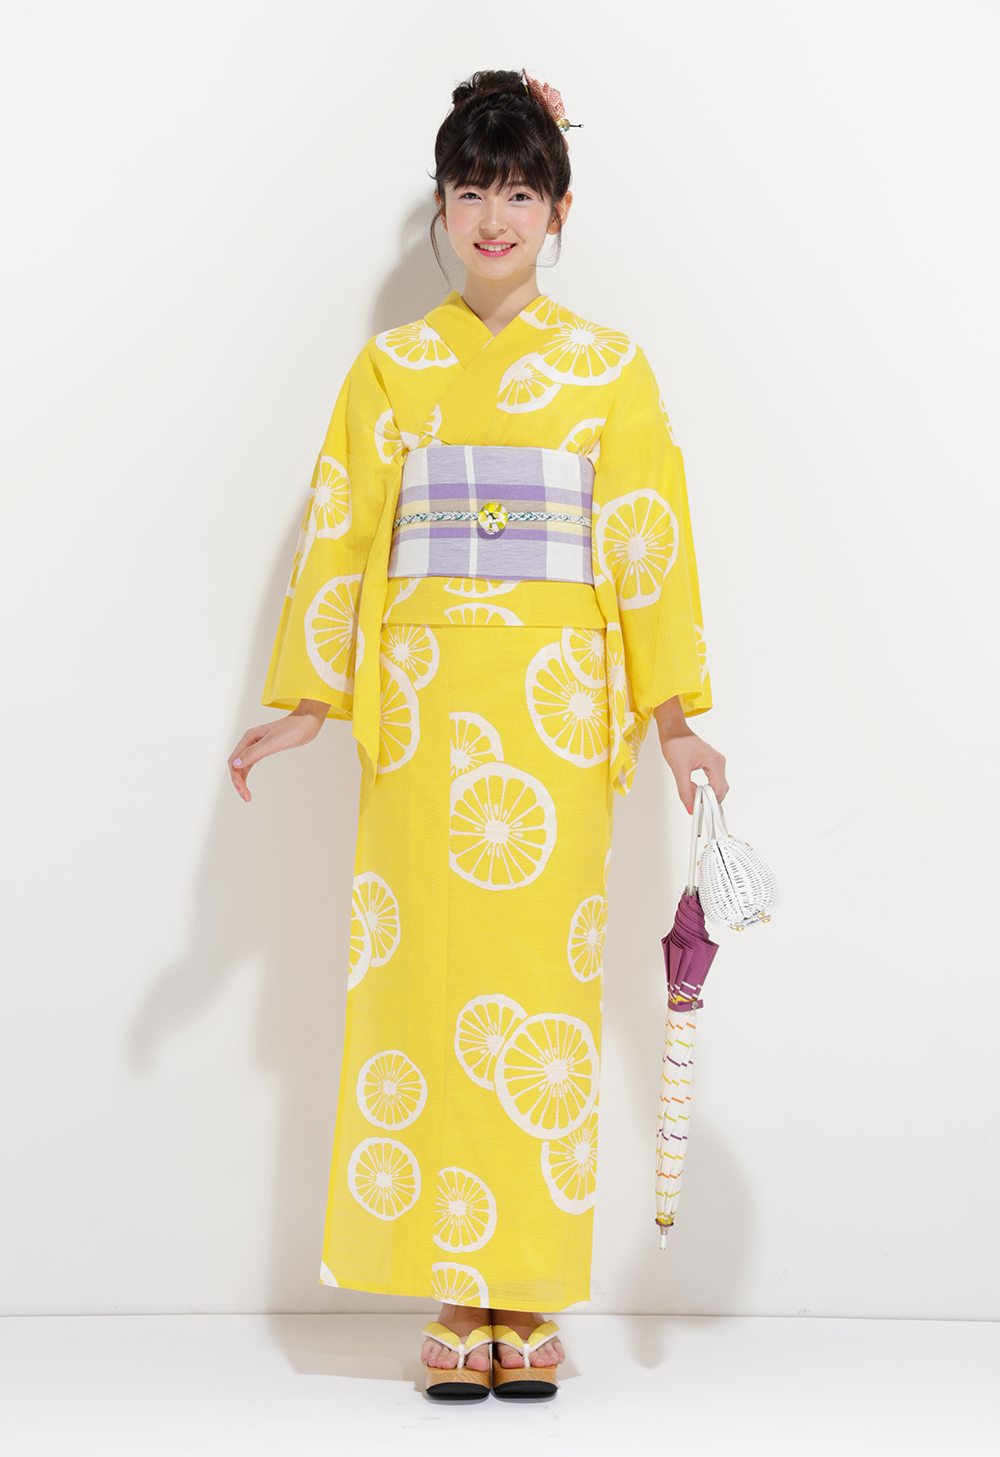 Kimono hairstyle variations, cute and stylish hairstyle ideas - Kyoto Kimono  Rental Mimosa